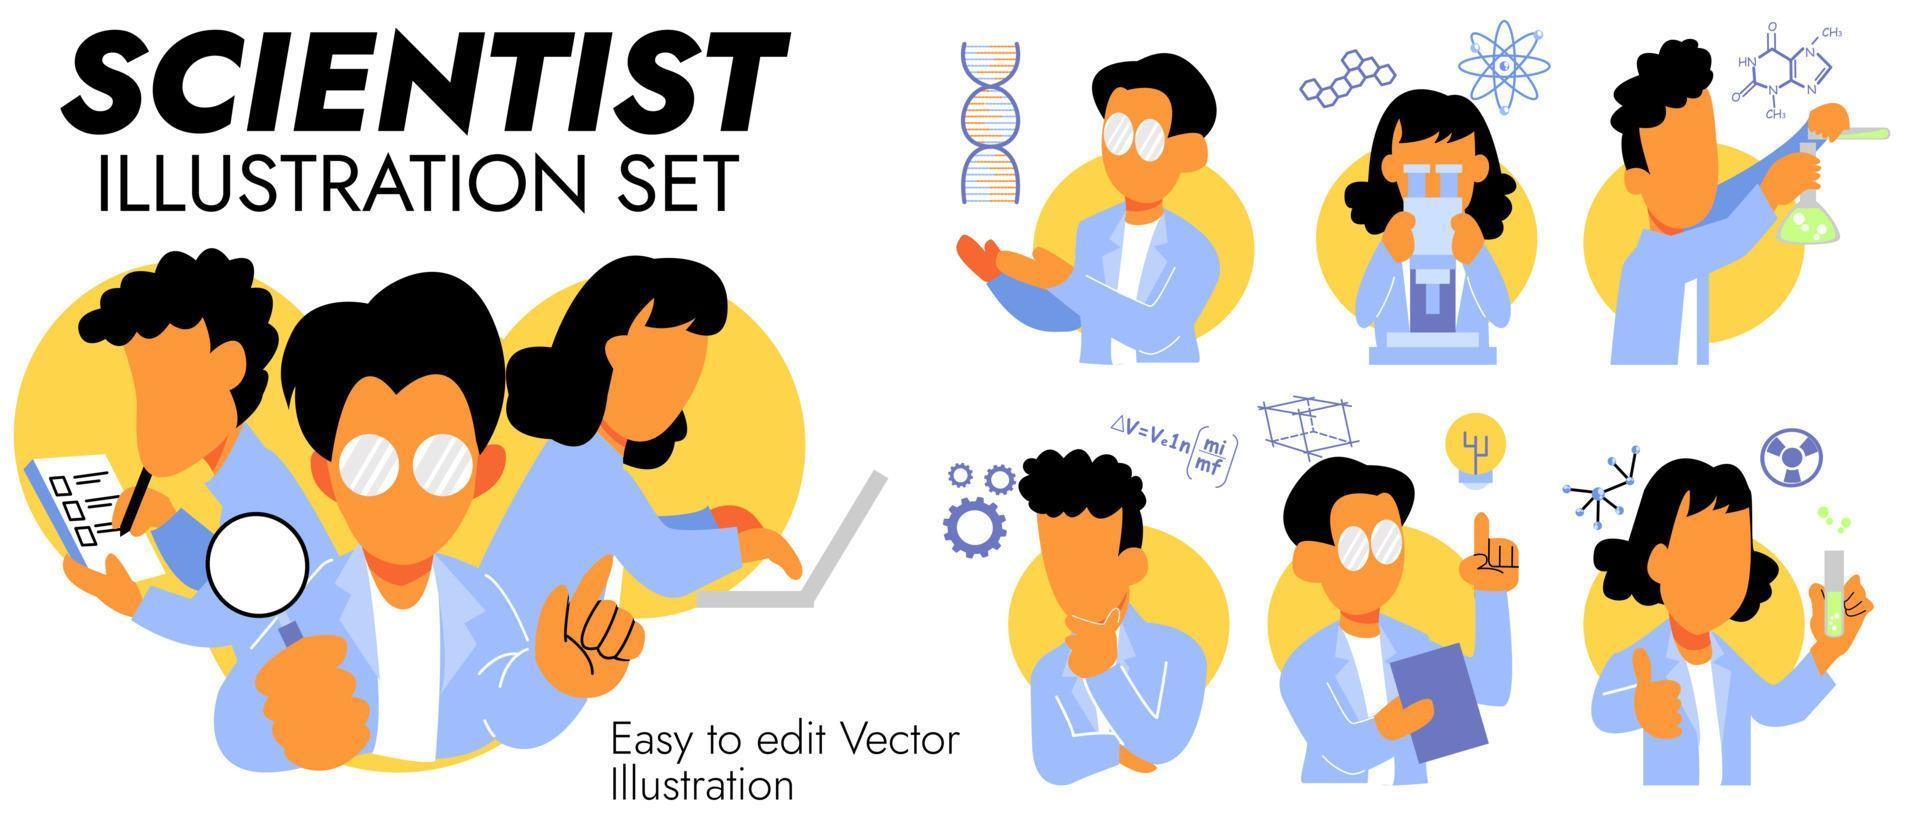 igh quality scientist Illustration set vector